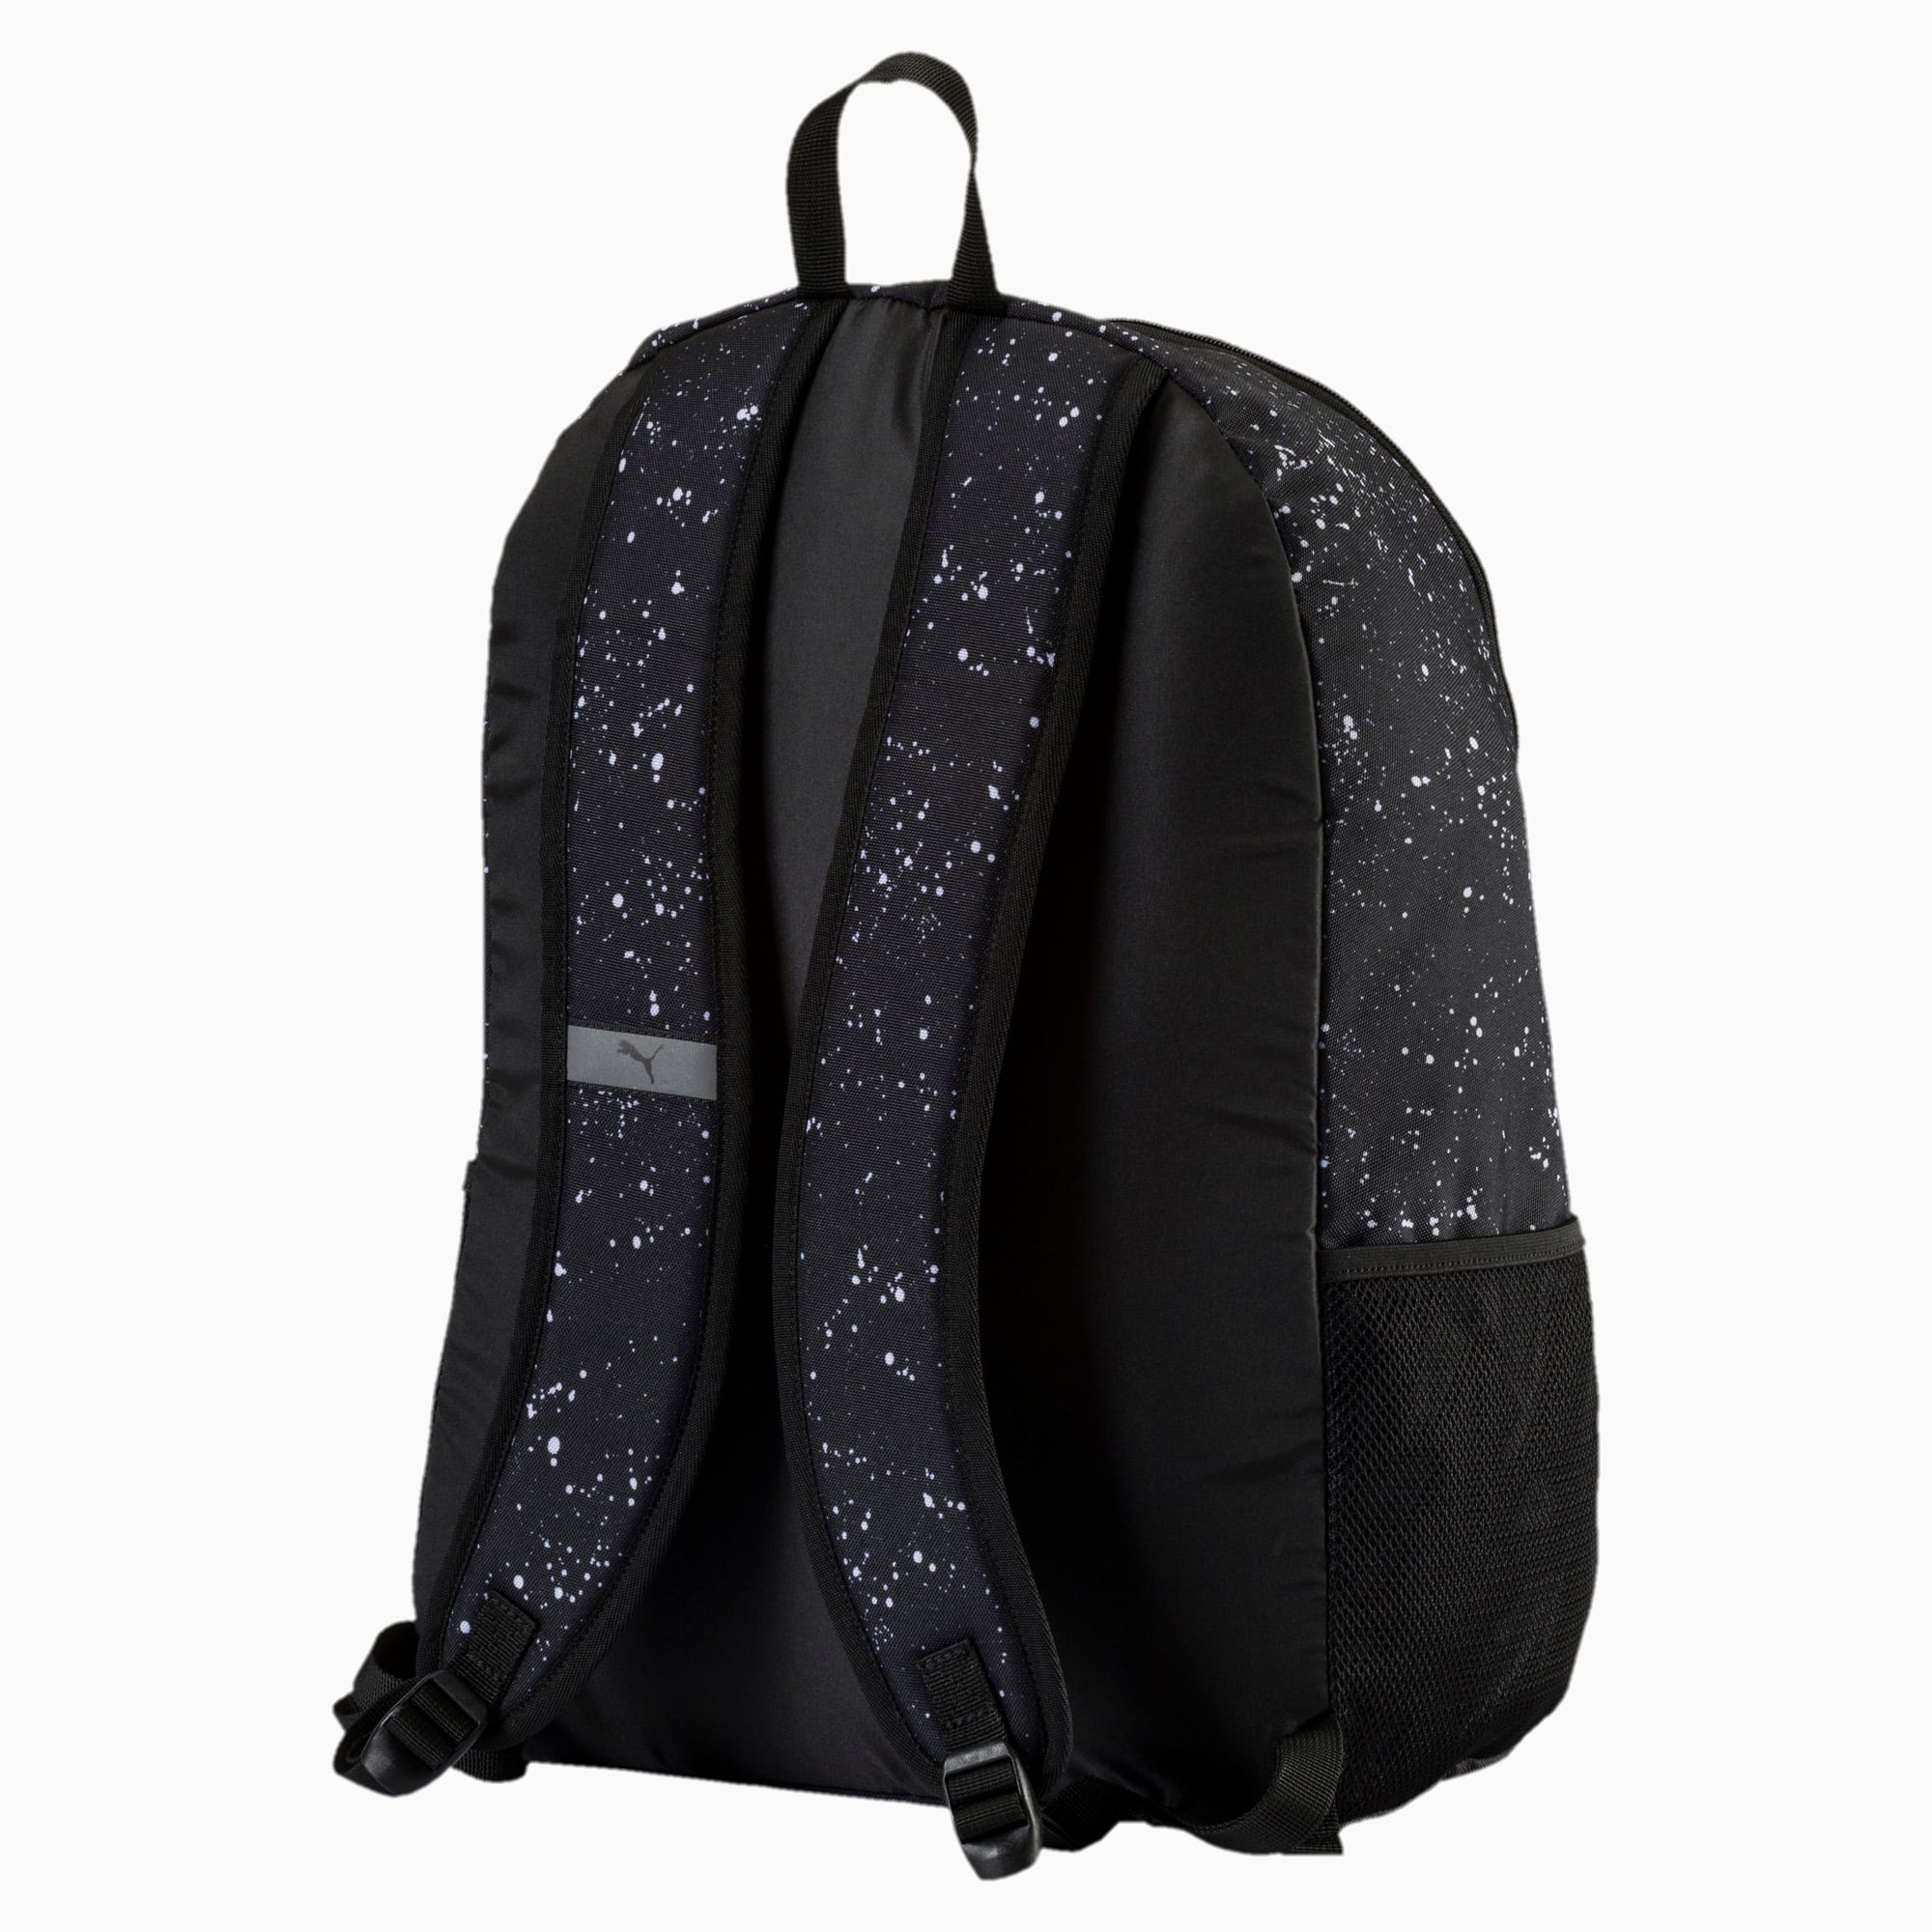 Alpha Backpack | PUMA Shopback PUMA | PUMA